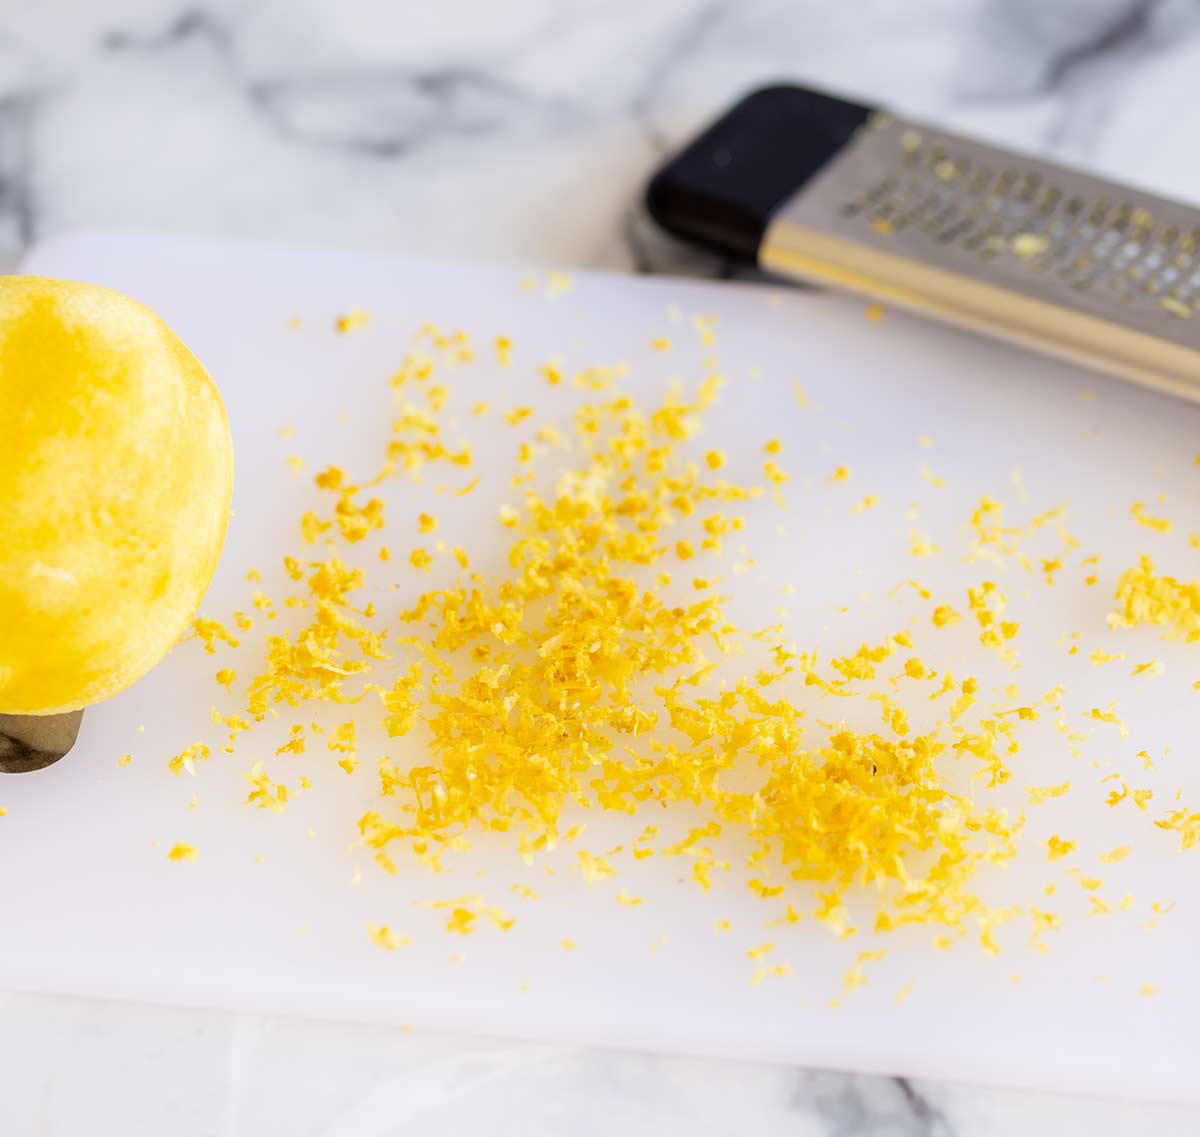 How to Dry Lemon Peel